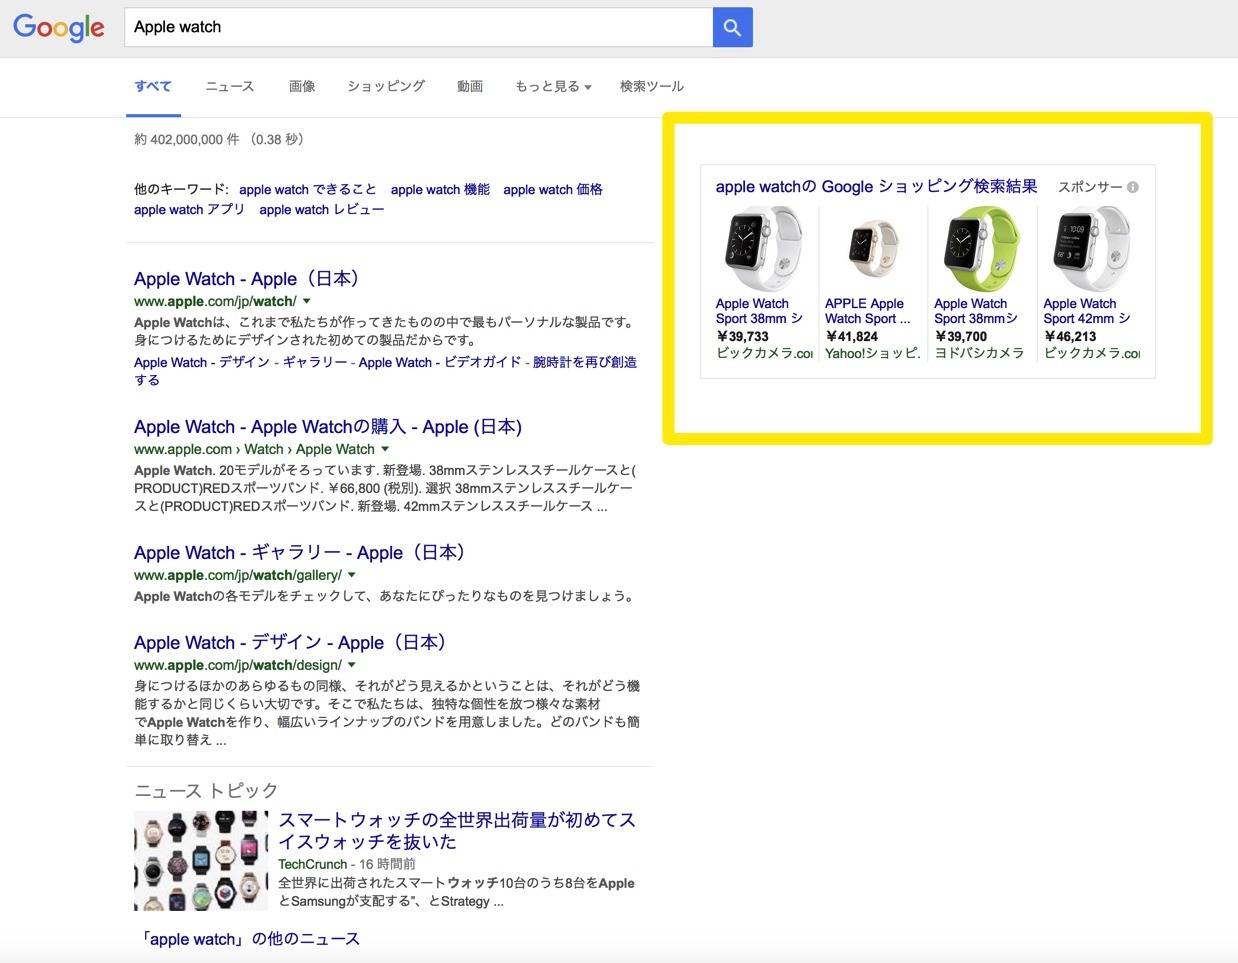 google-ad